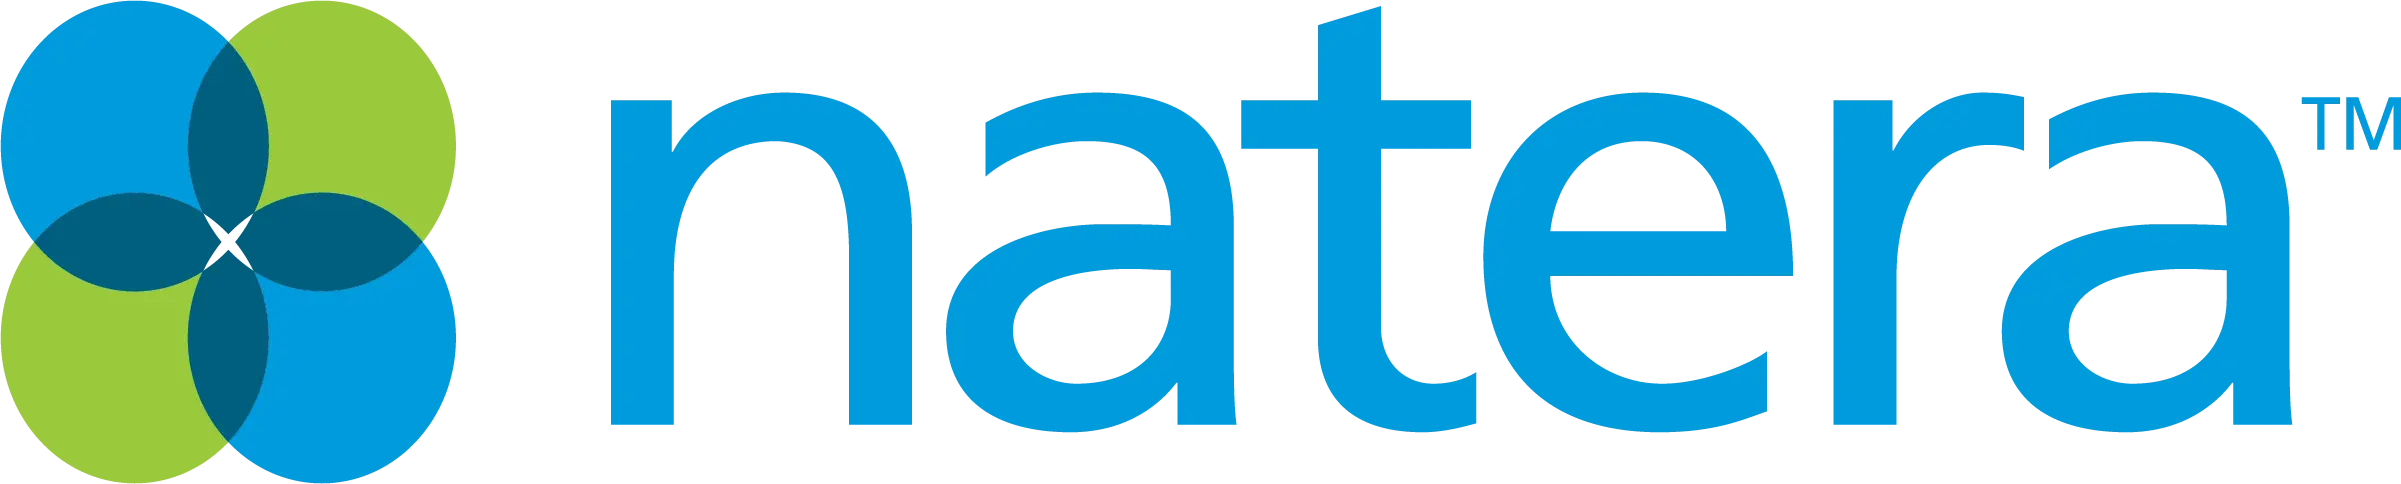 Natera_Logo